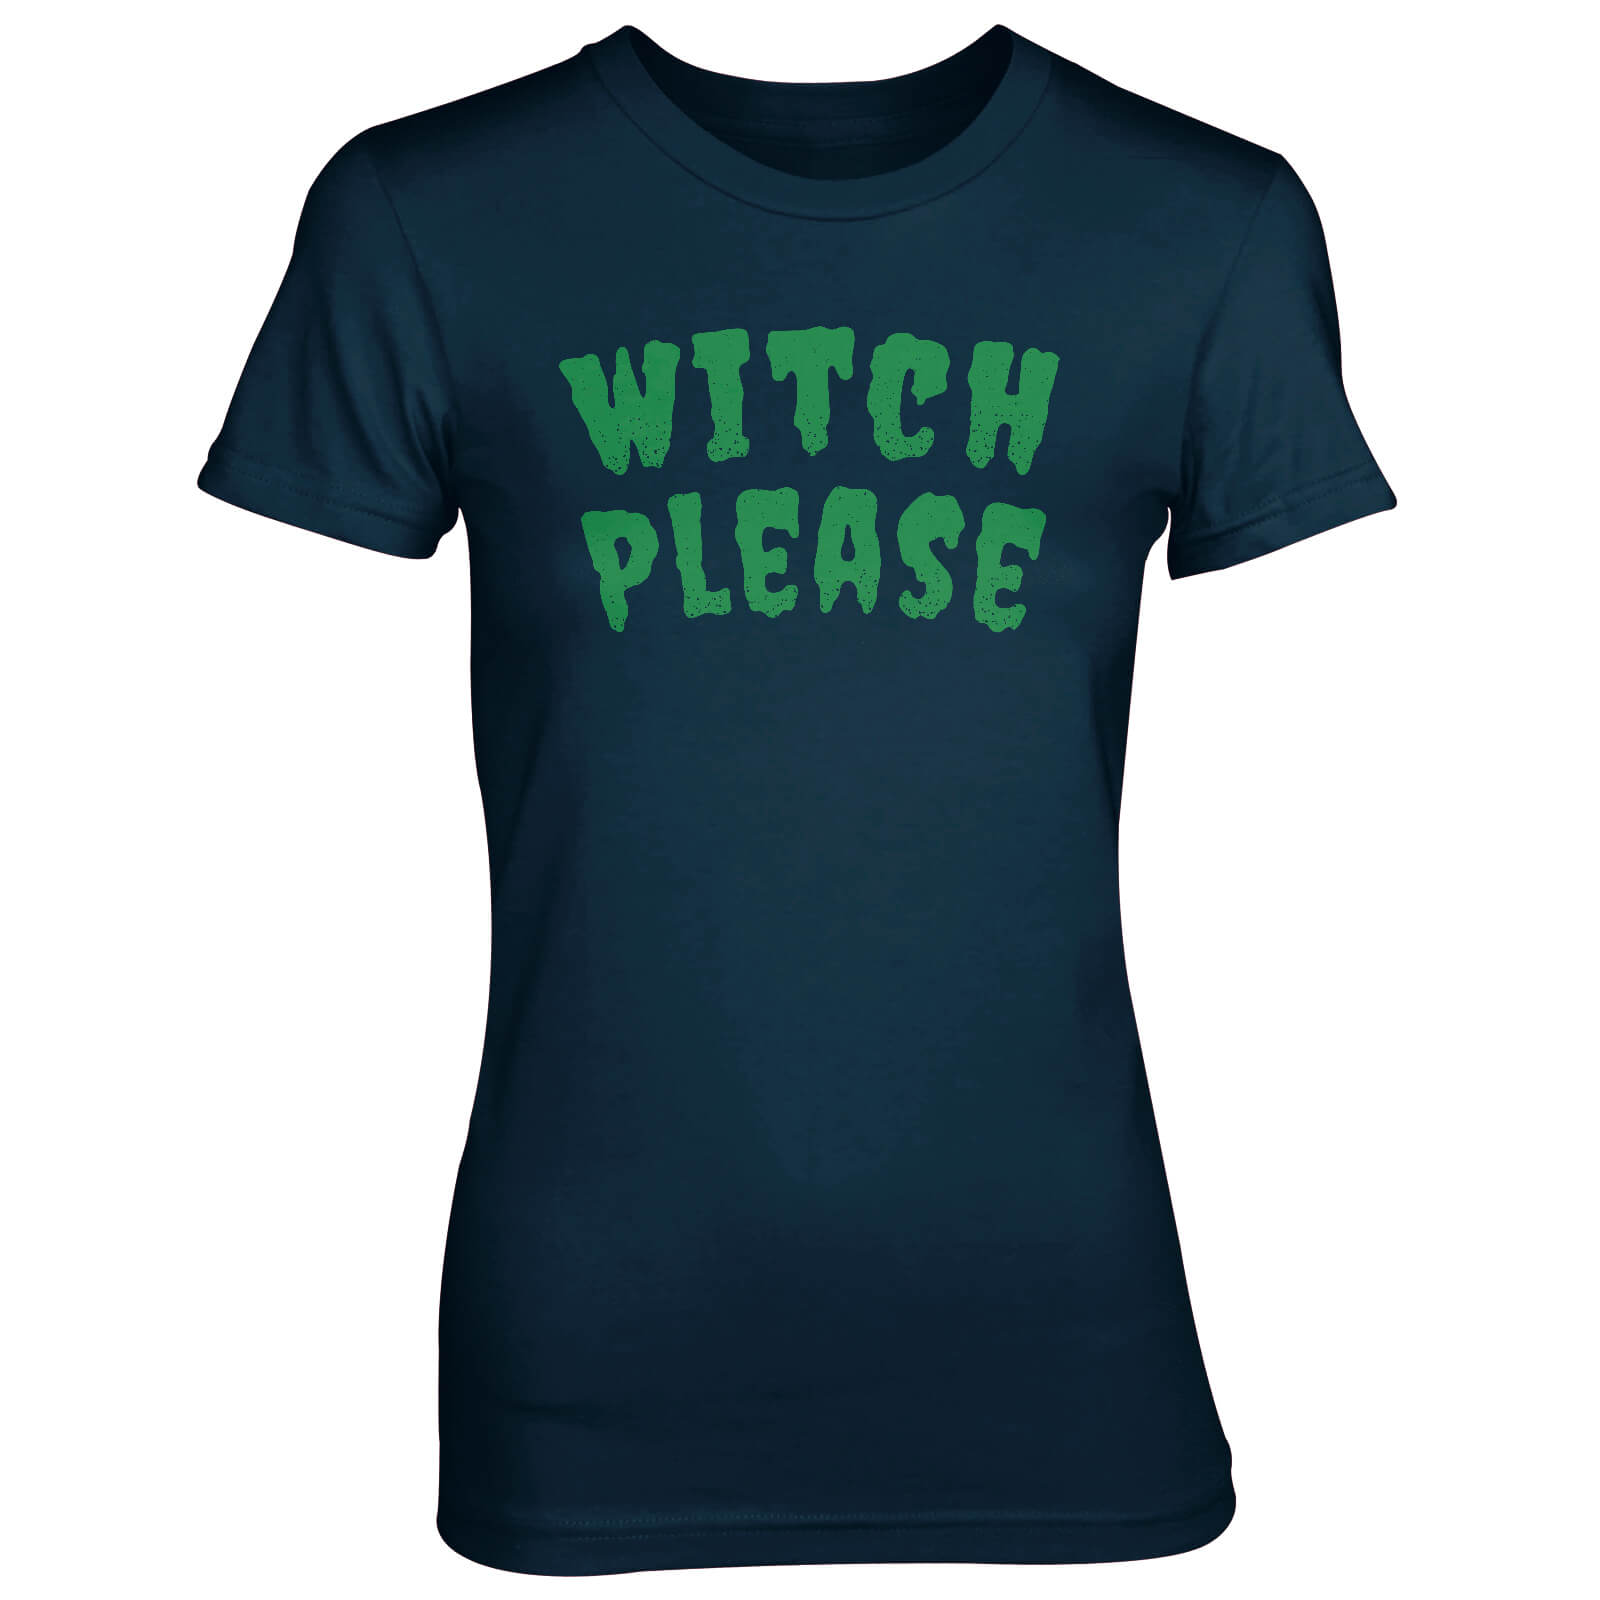 Witch Please Women's Navy T-Shirt - S - Navy